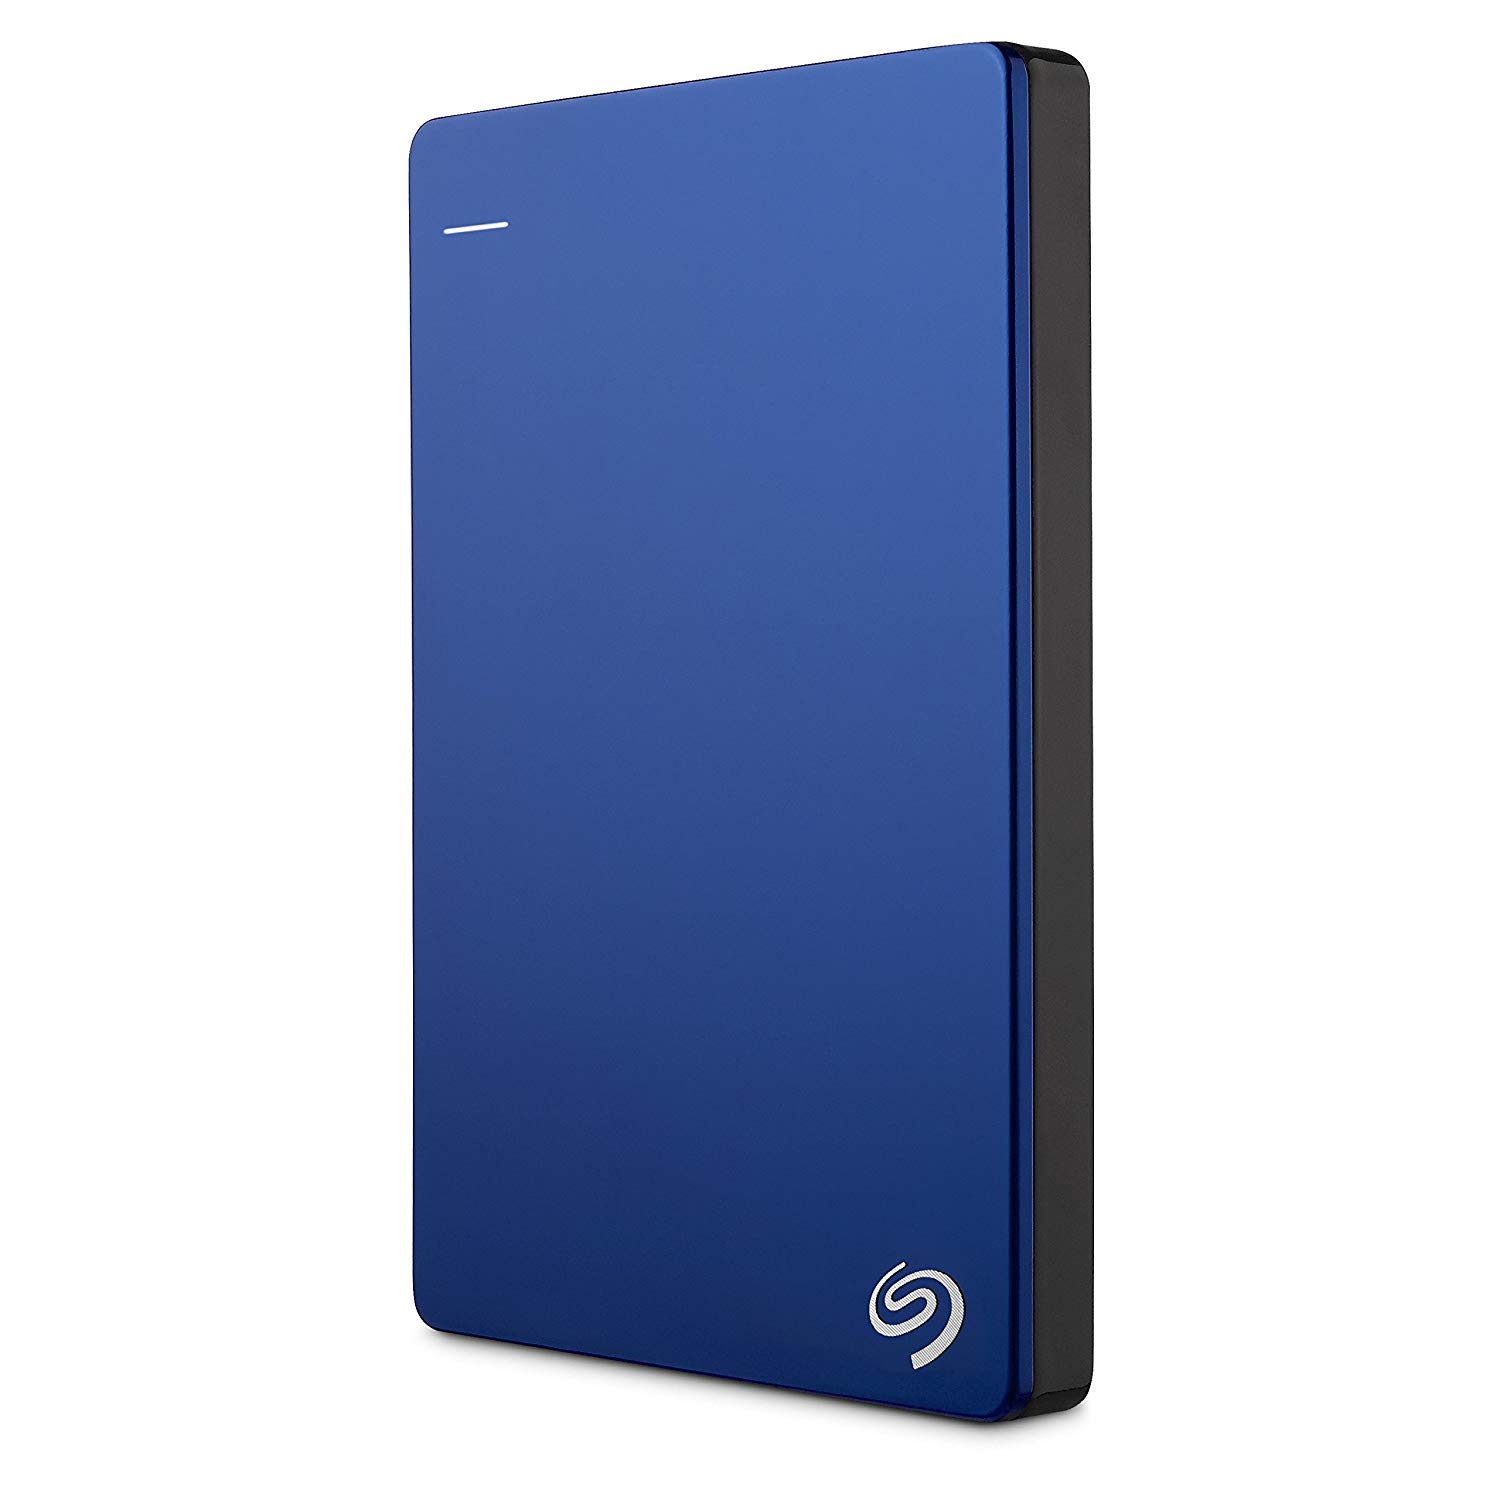 Seagate 2 TB Backup Plus USB 3.0 Slim Portable Hard Drive - Blue [STDR2000202]